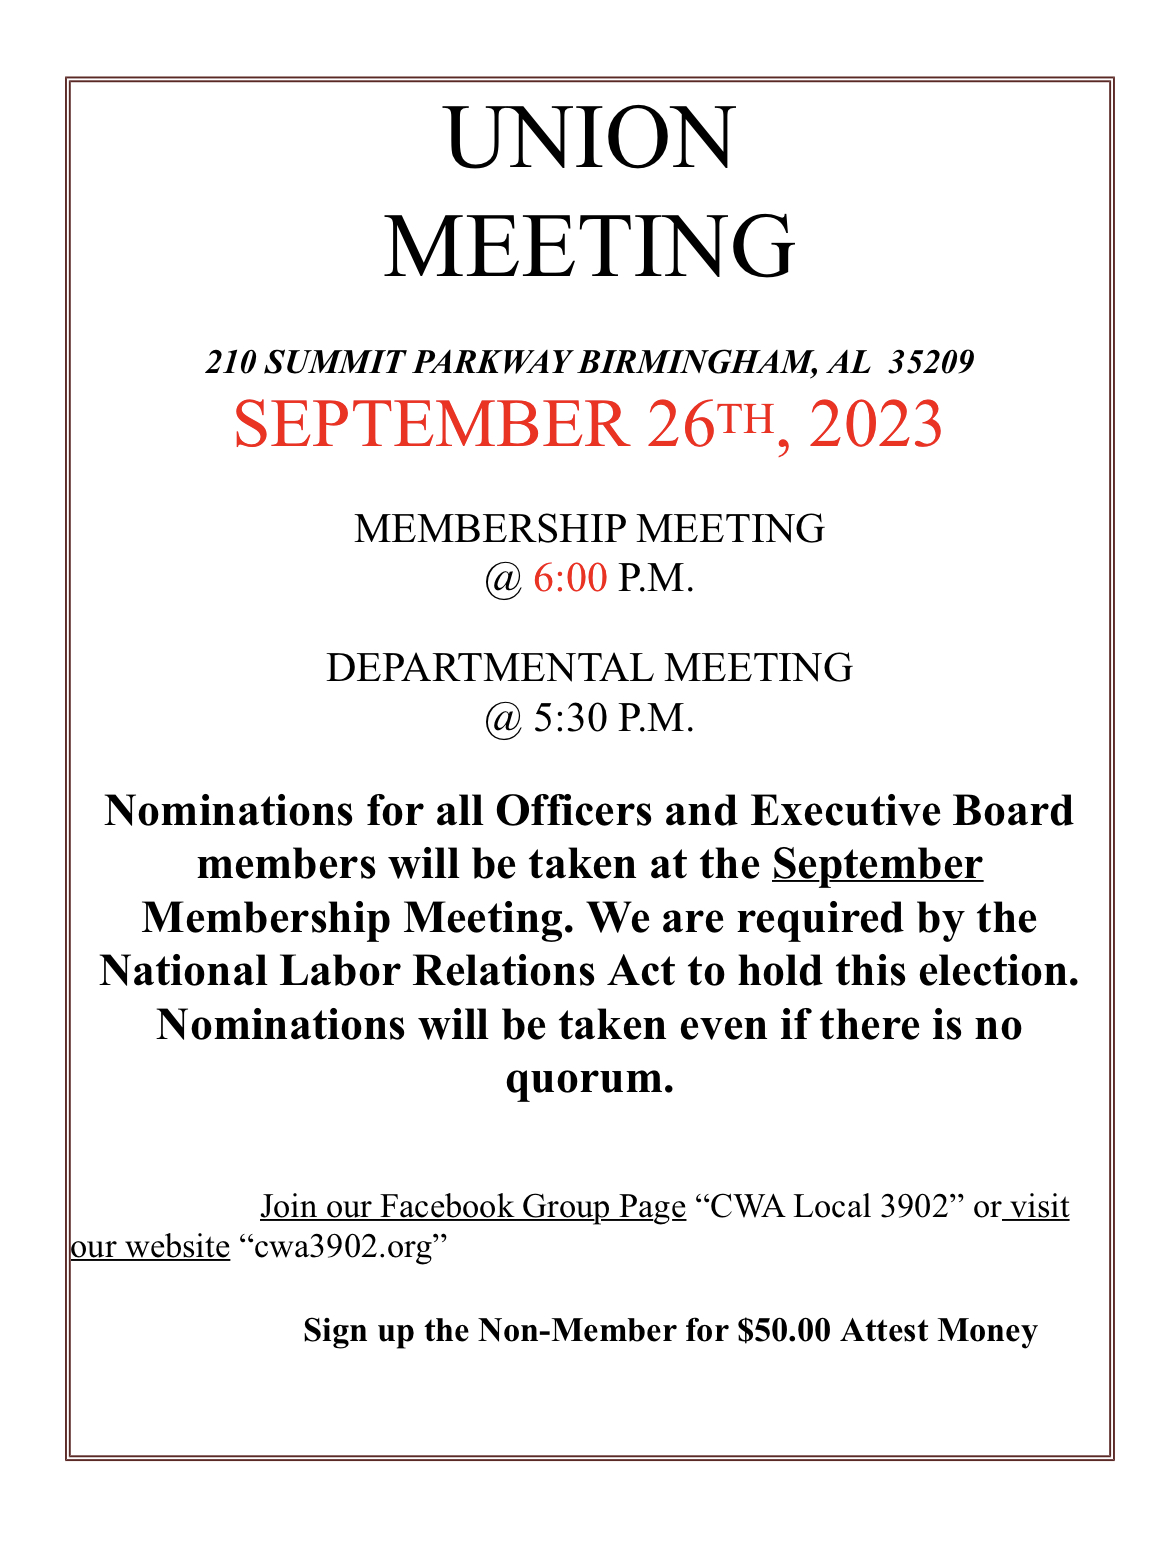 Membership meeting